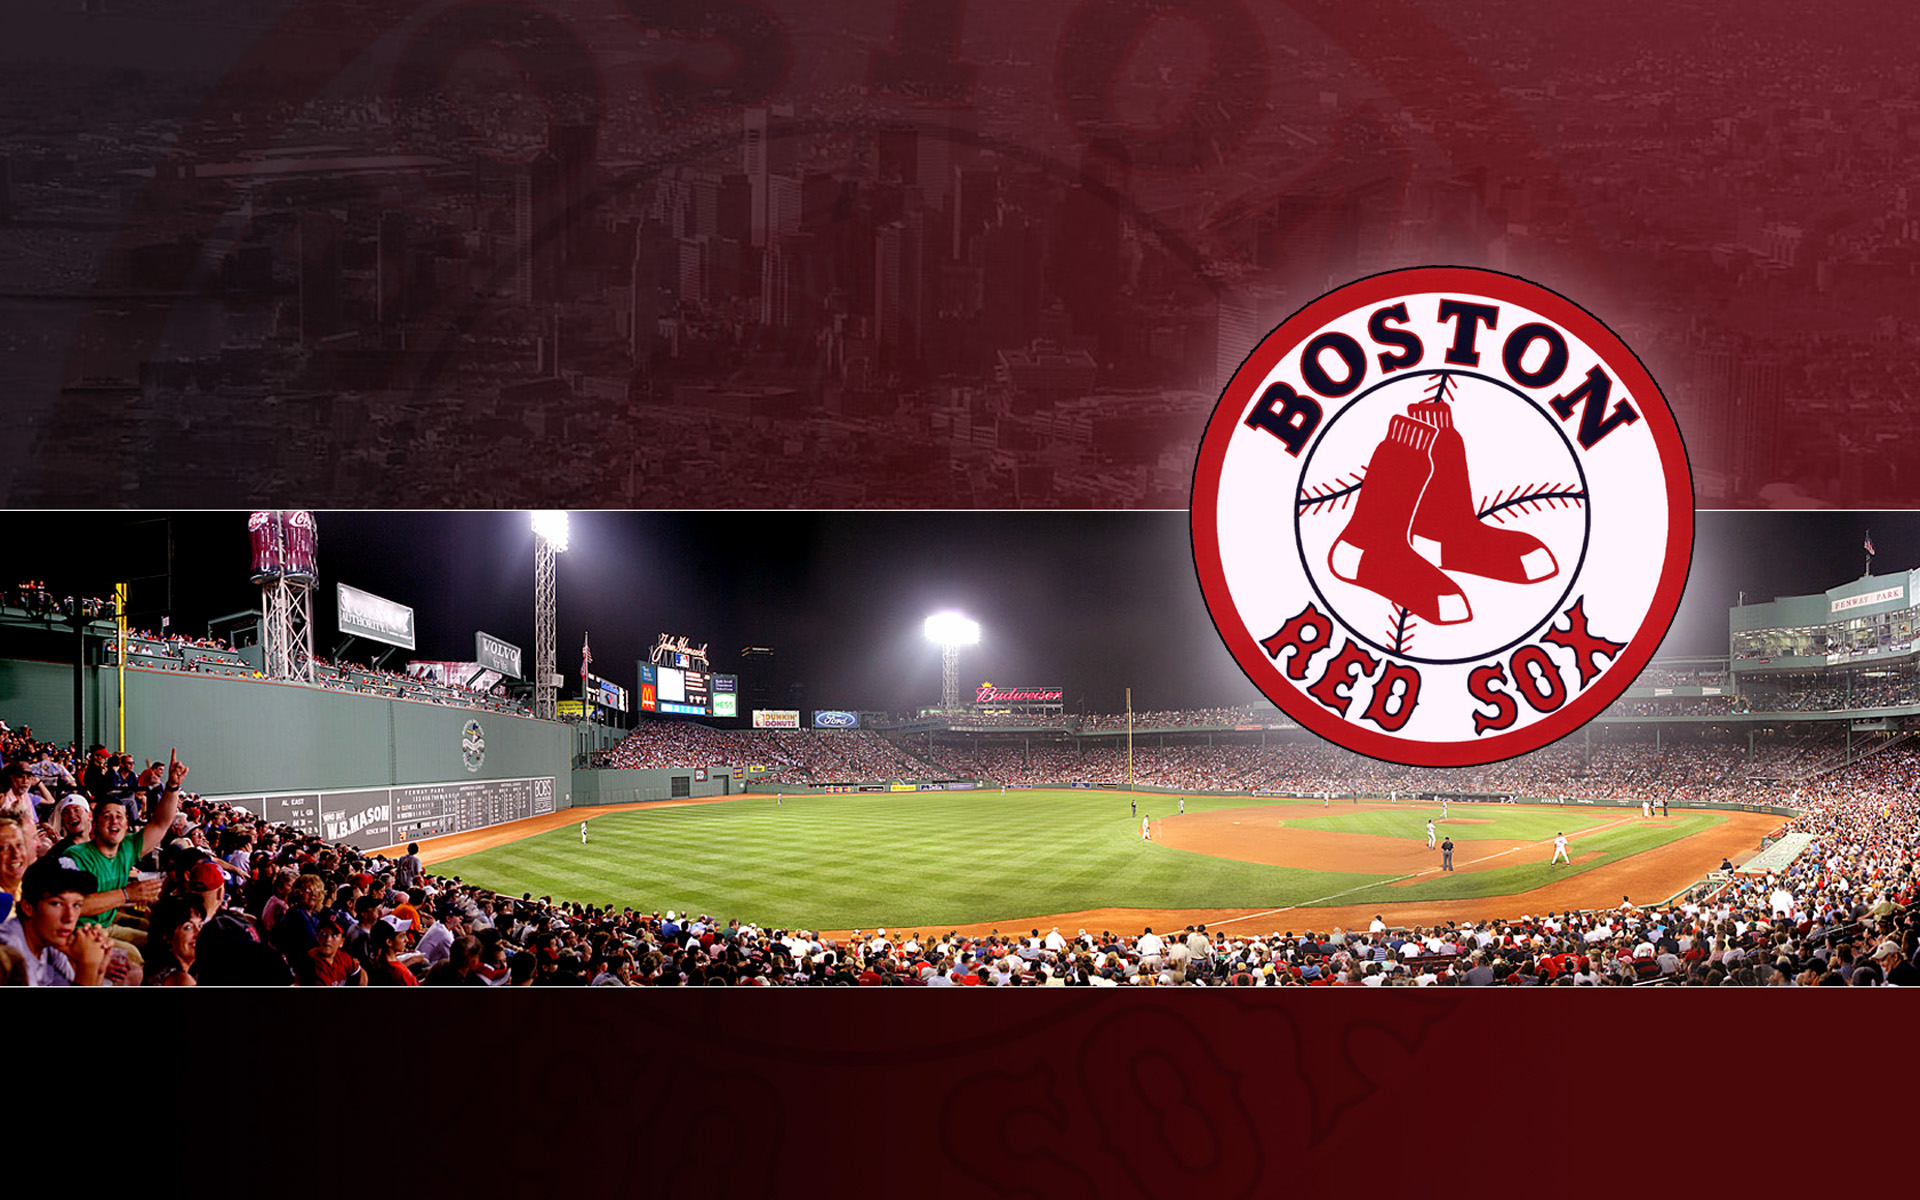 Boston Red Sox Stadium 1920x1200 Wallpaper - 1526384